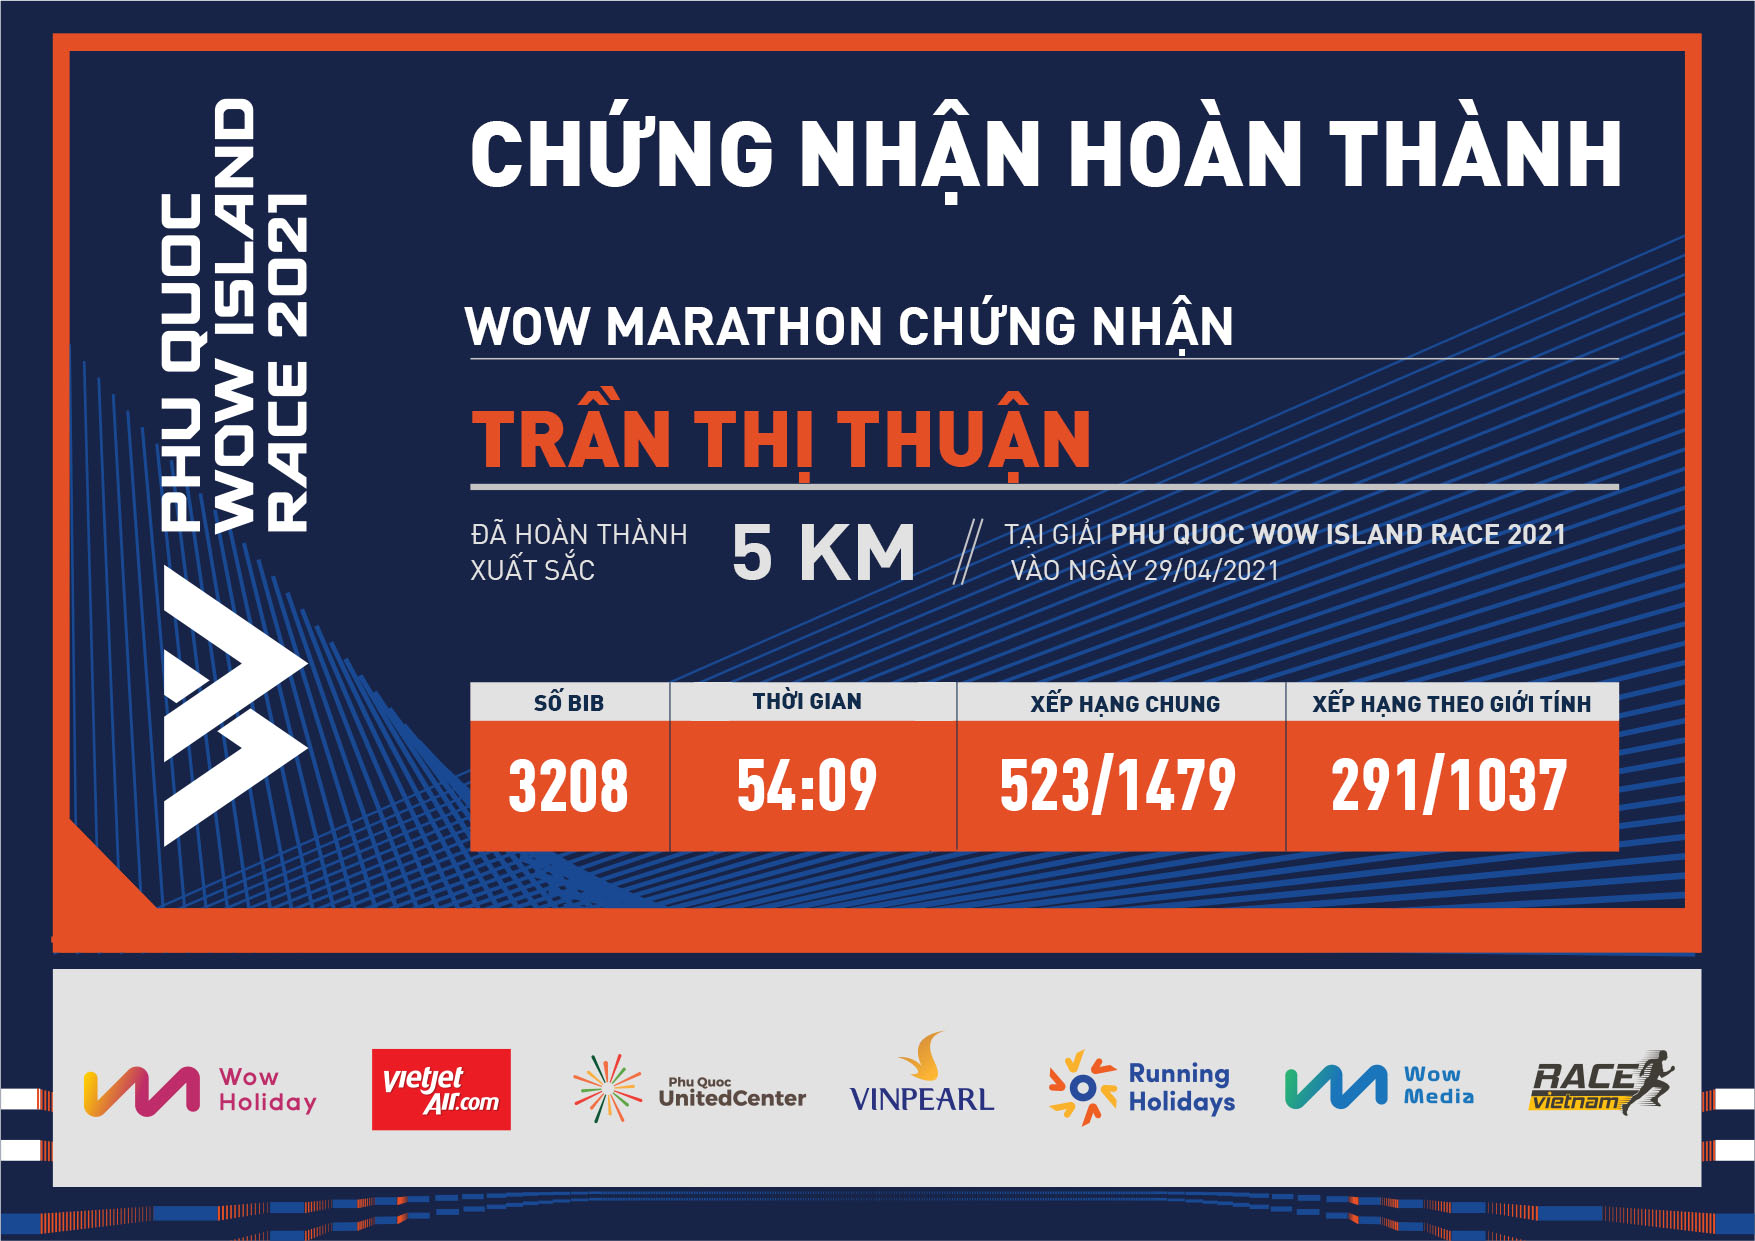 3208 - Trần Thị Thuận